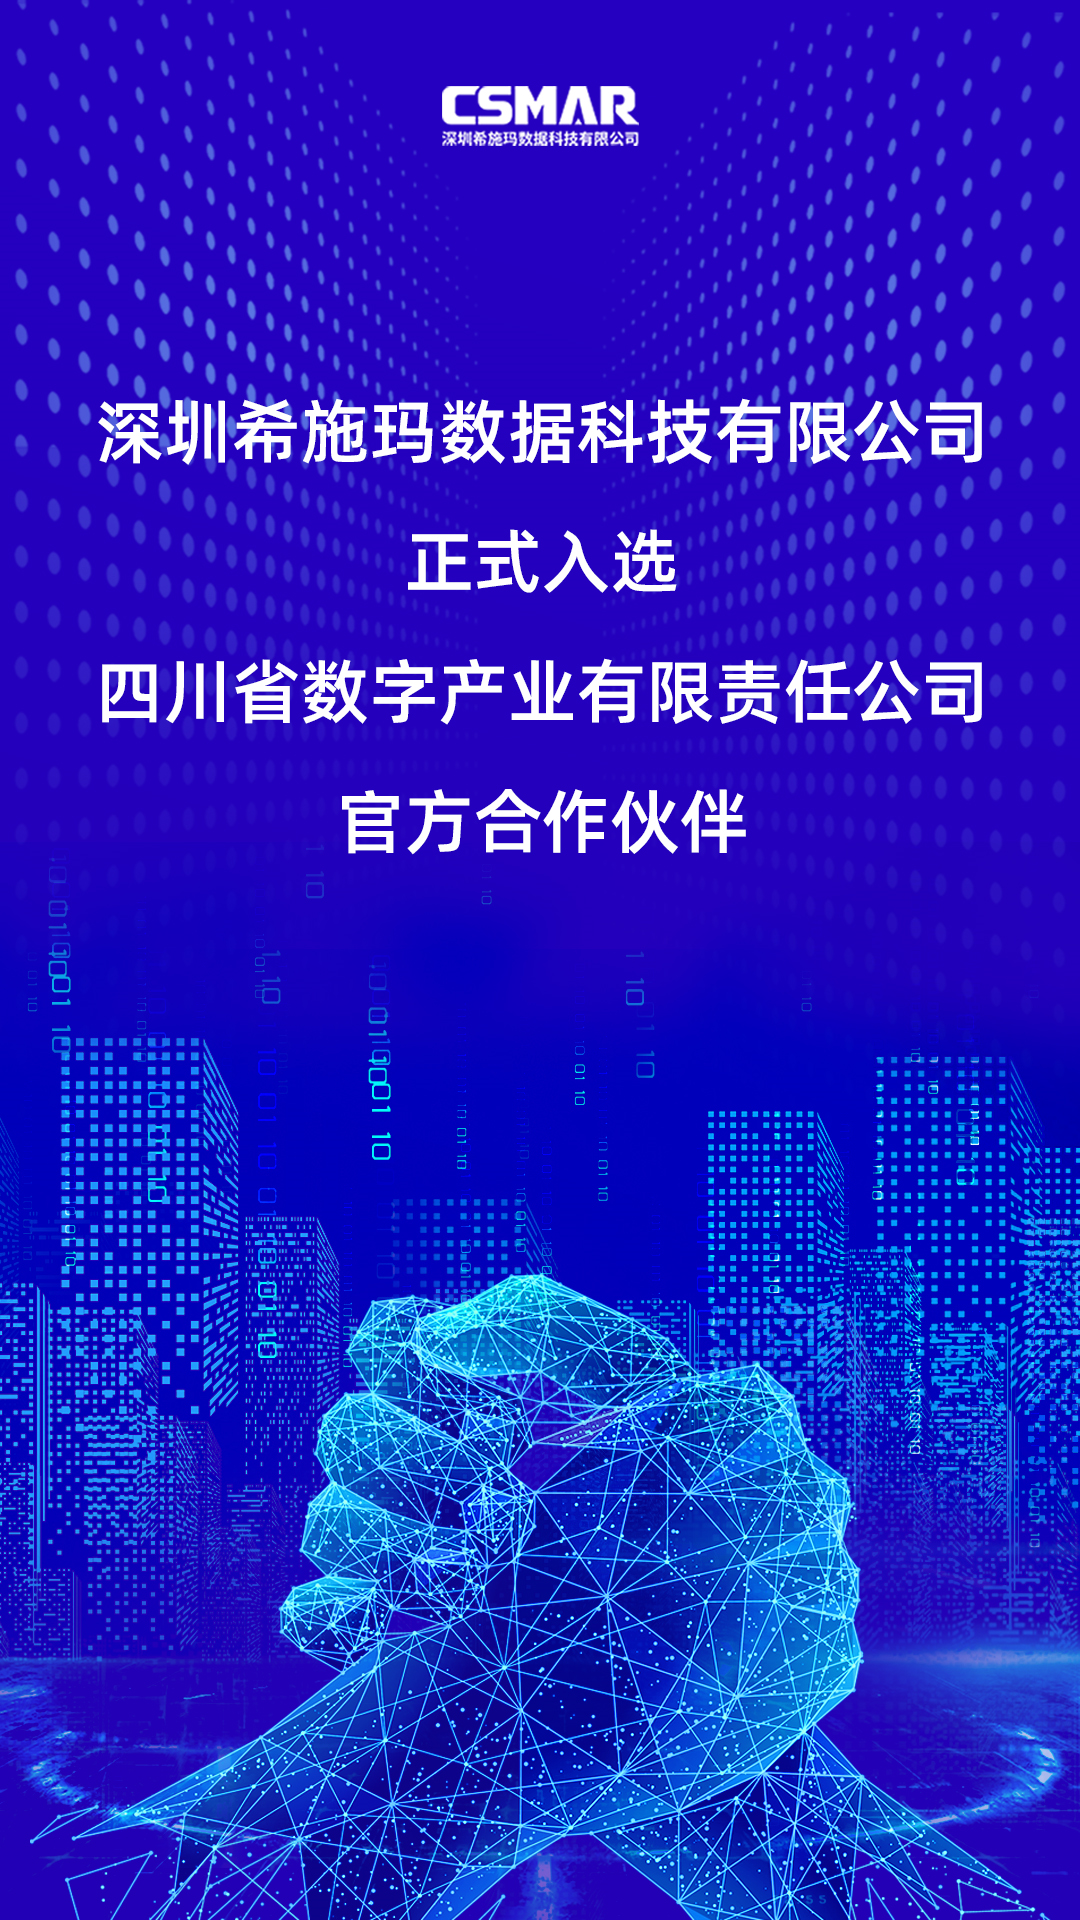  4399js金沙-www.4399.com|官方网站正式入选四川省数字产业有限责任公司官方合作伙伴！